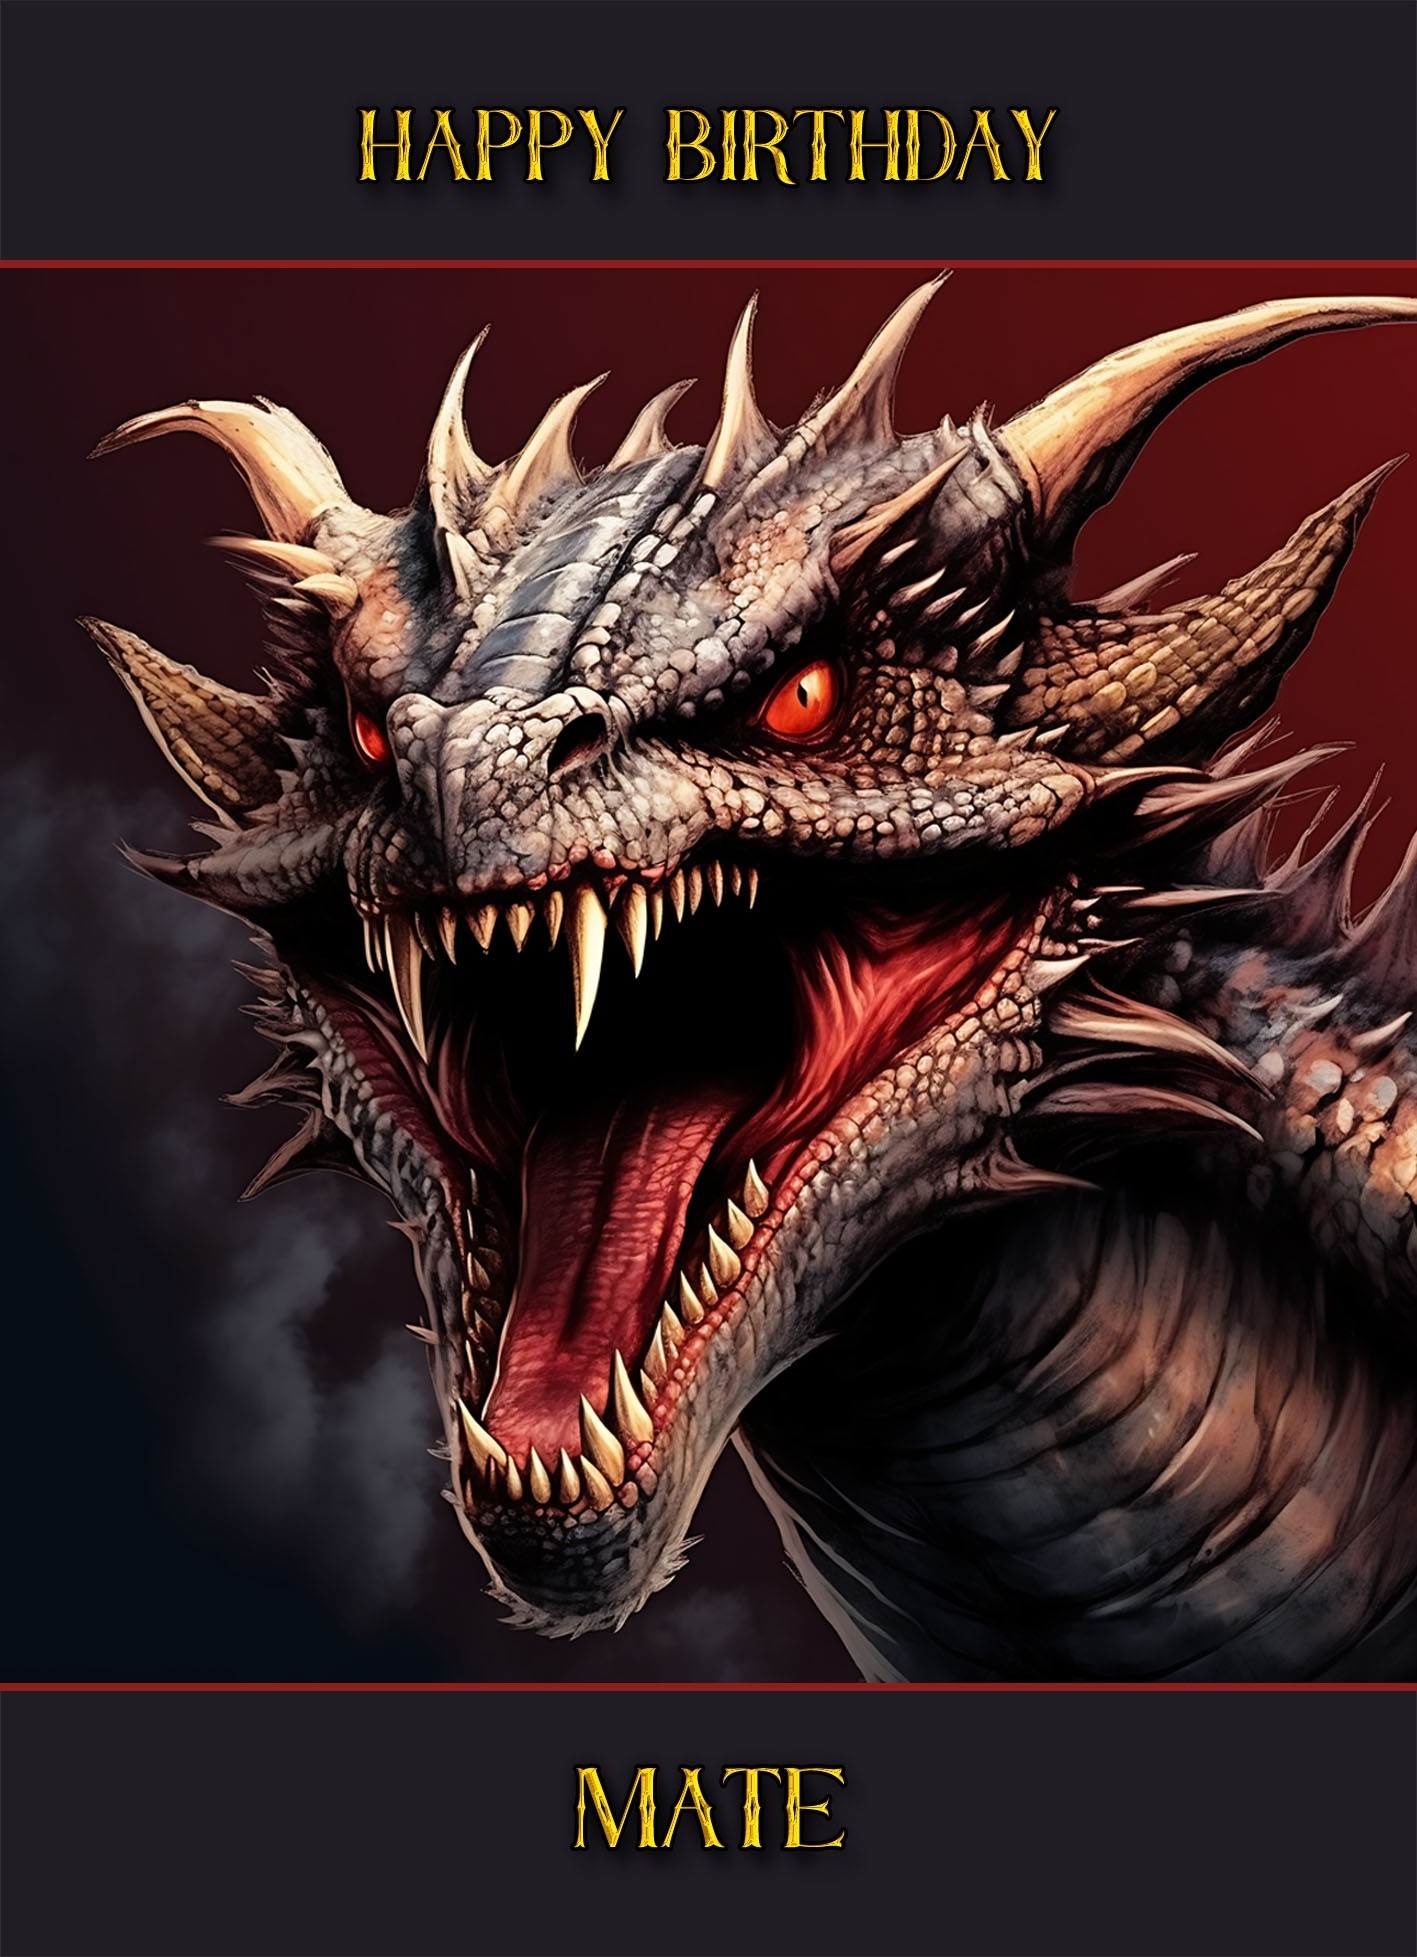 Gothic Fantasy Dragon Birthday Card For Mate (Design 2)